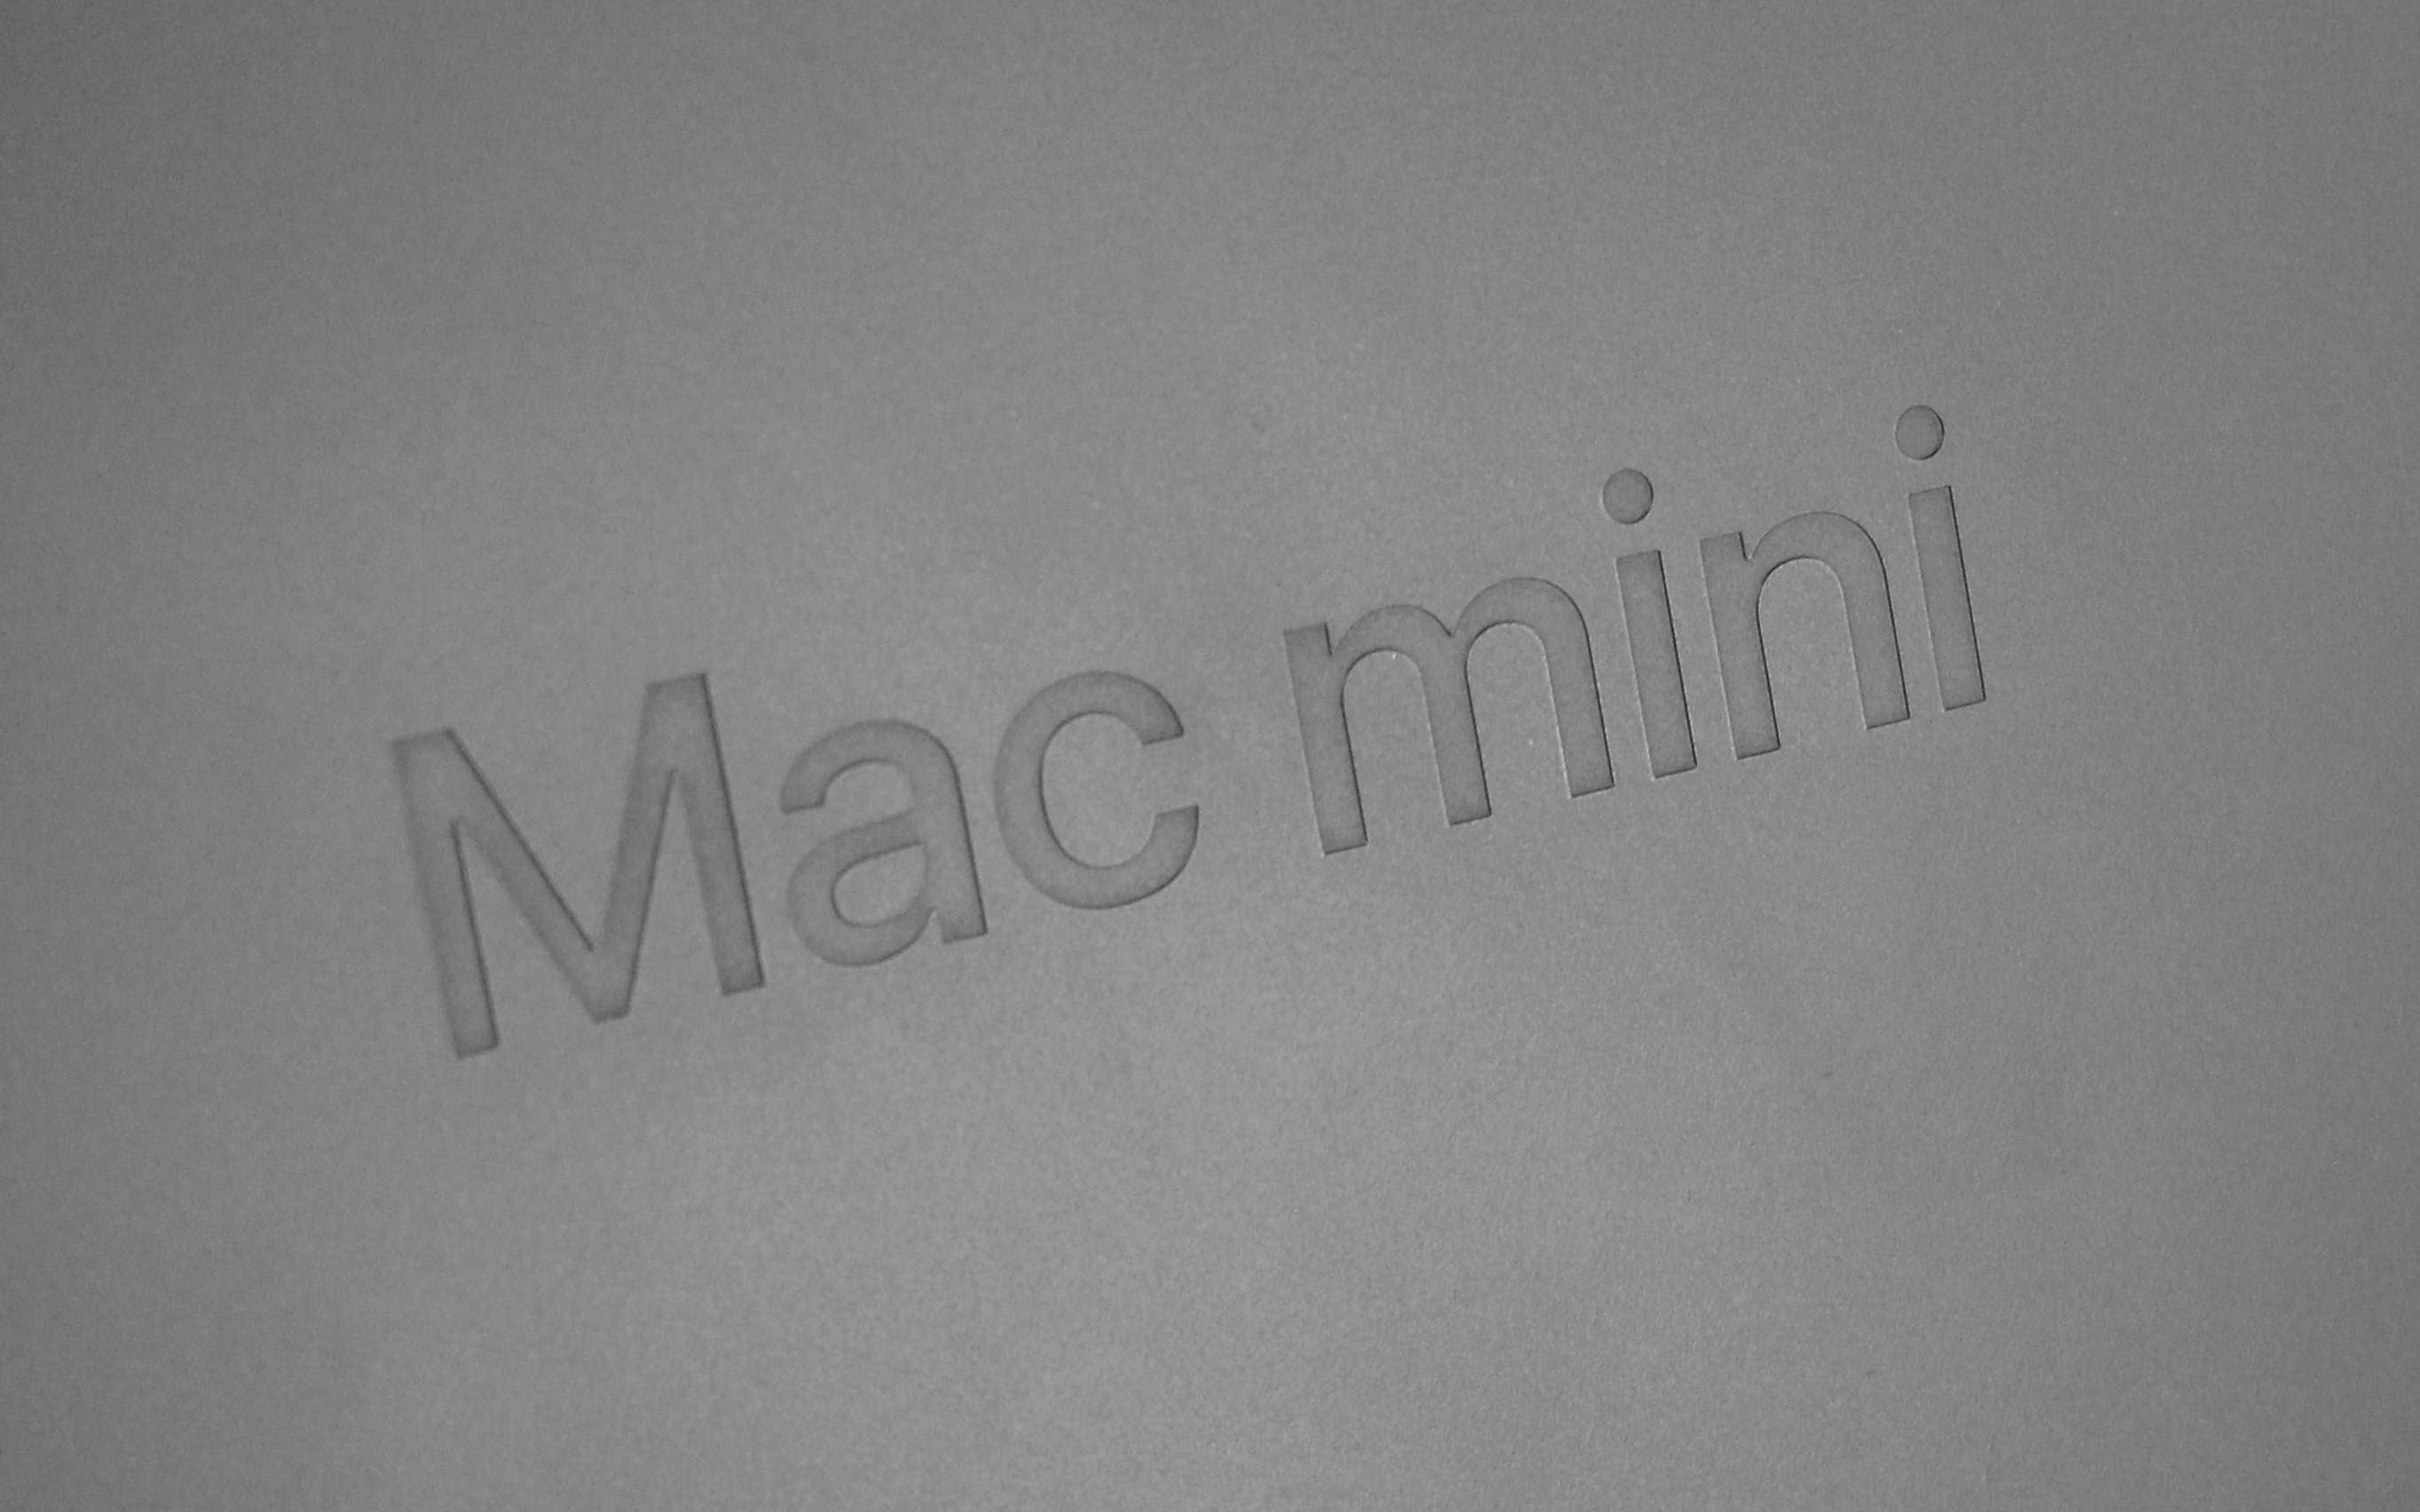 Apple Mac Mini 2018 (MRTT2LL/A, A1993) - 3.0GHz 6-core i5, Compact